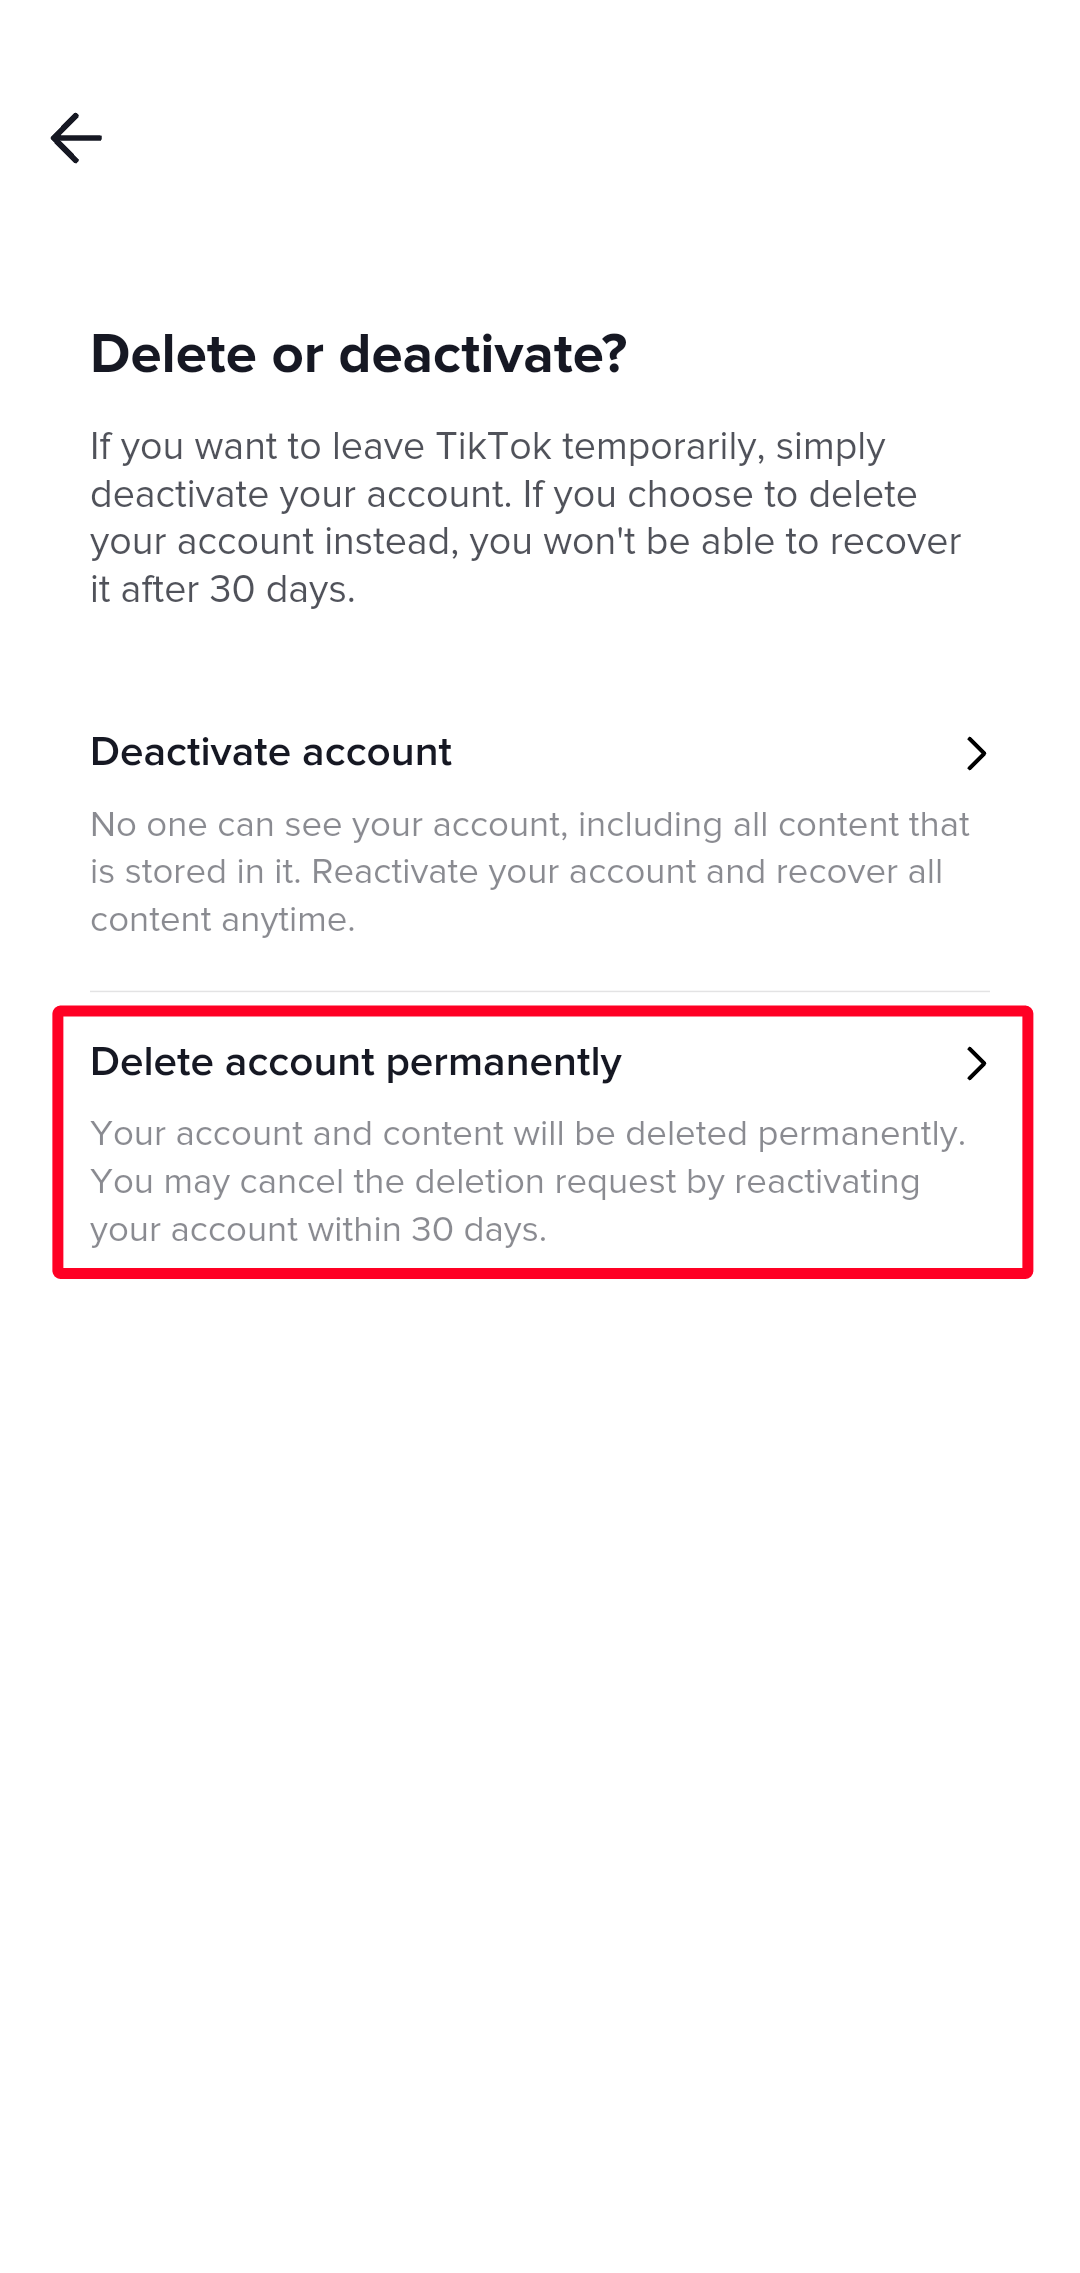 Delete or deactivate menu on TikTok